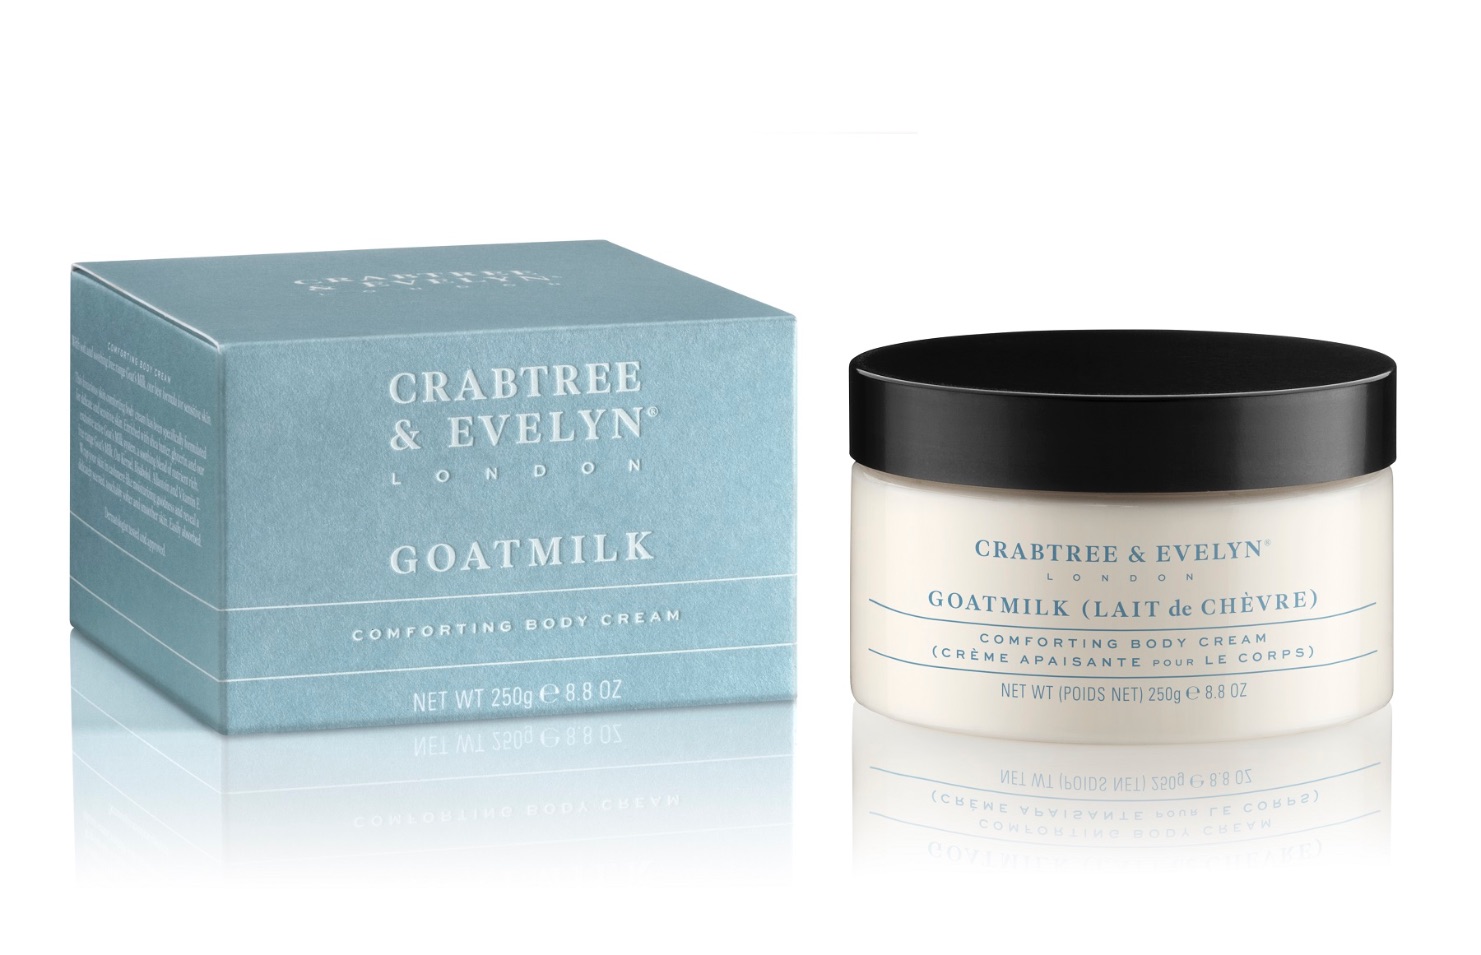 Crabtree & Evelyn Goatmilk Body Cream 250g